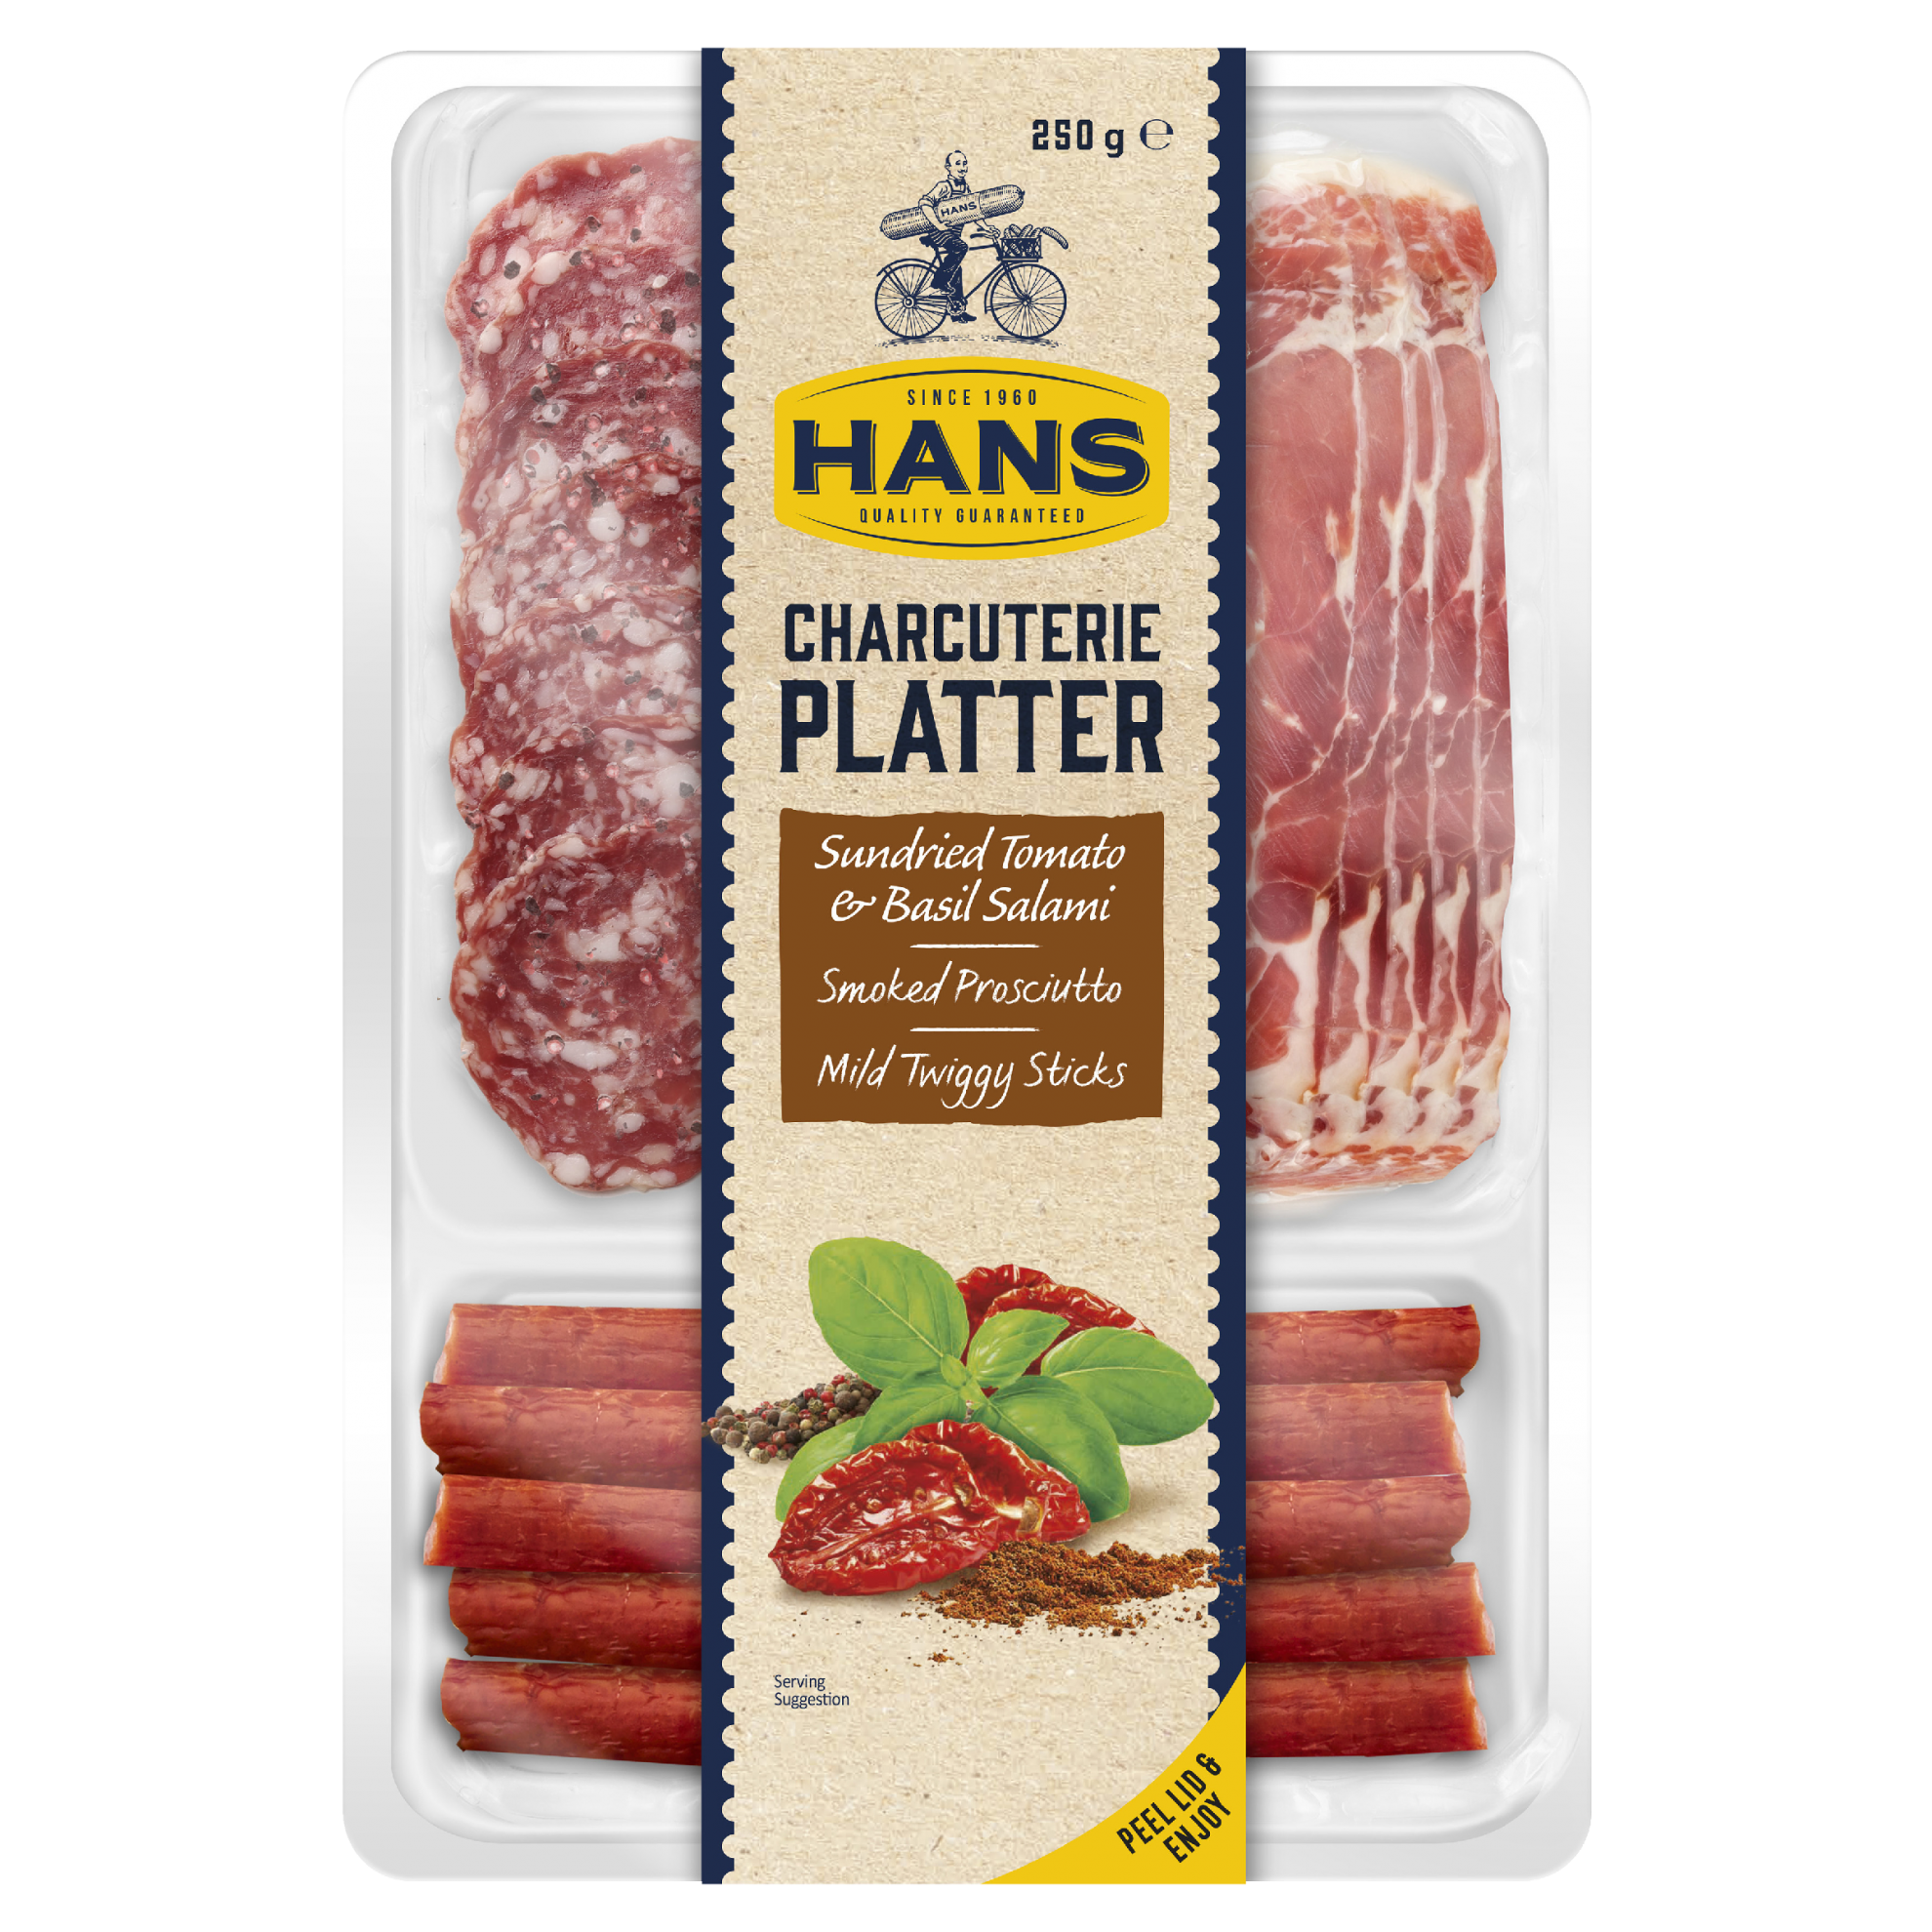 Hans Charcuterie Platter – Sundried Tomato & Basil Salami with Prosciutto, Mild Twiggy Sticks 250g